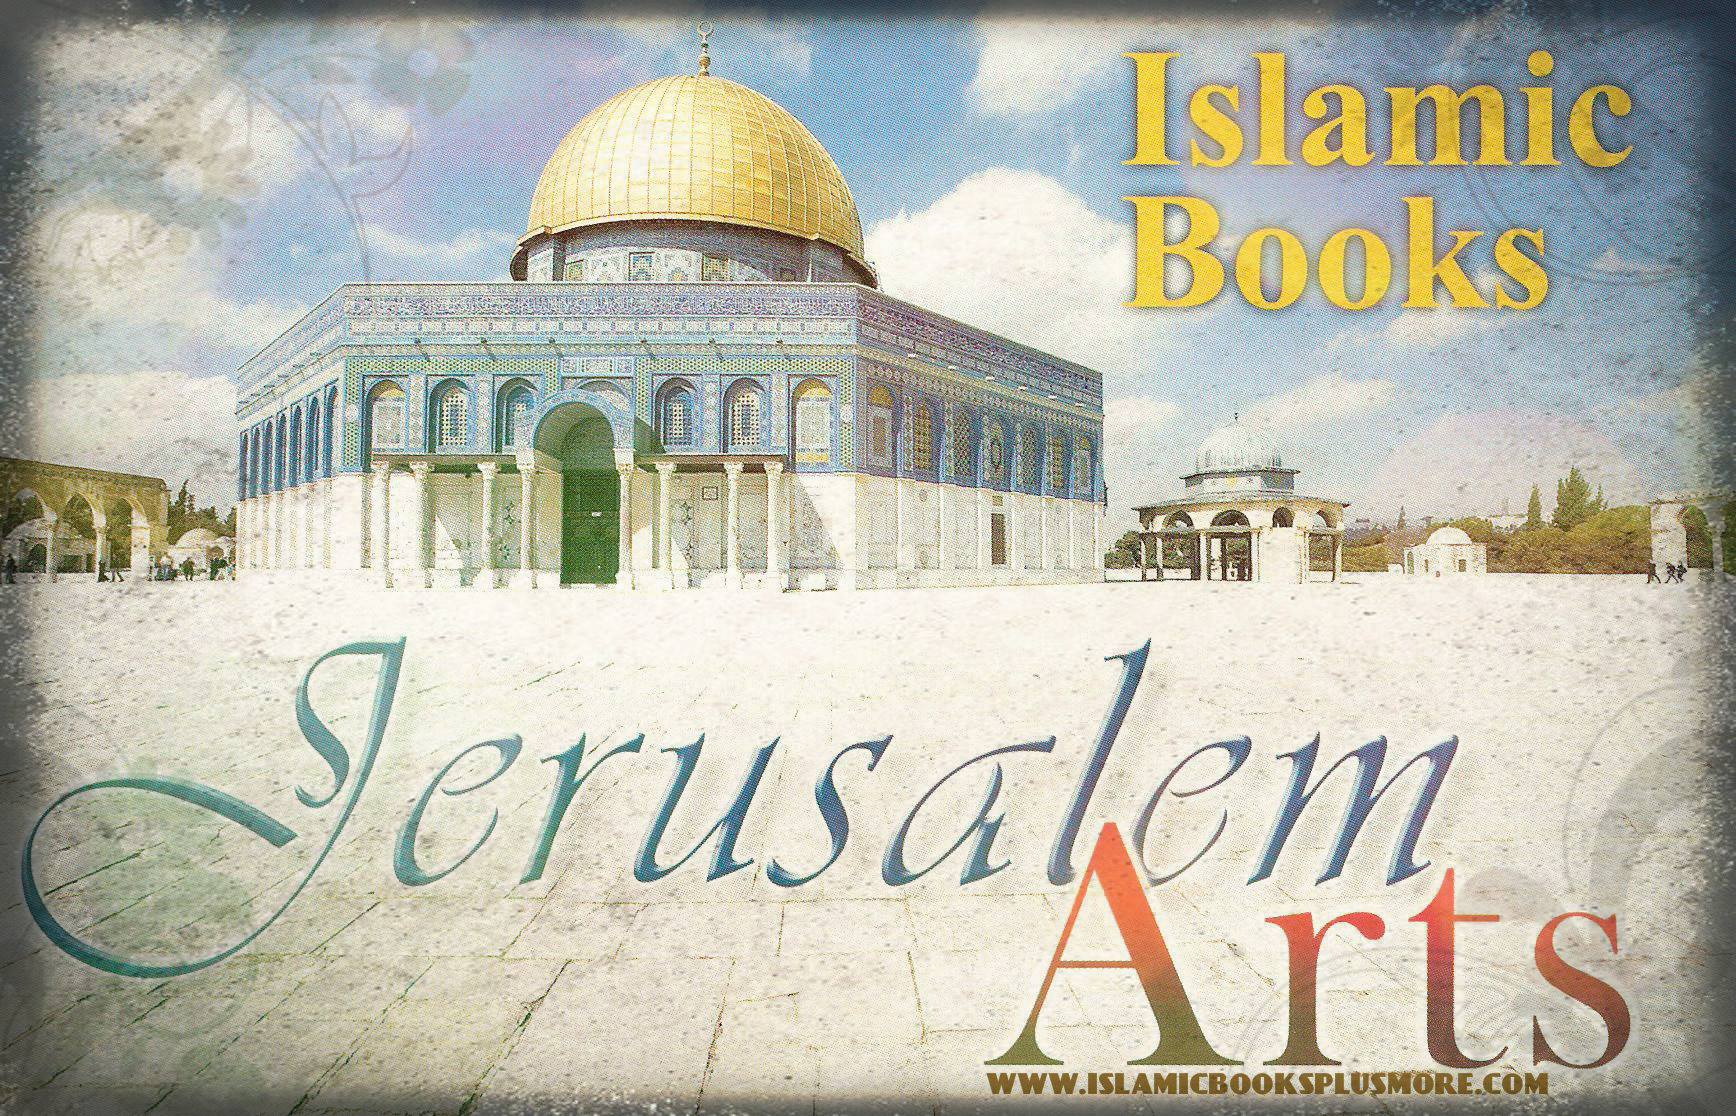 My Islamic Bookstore